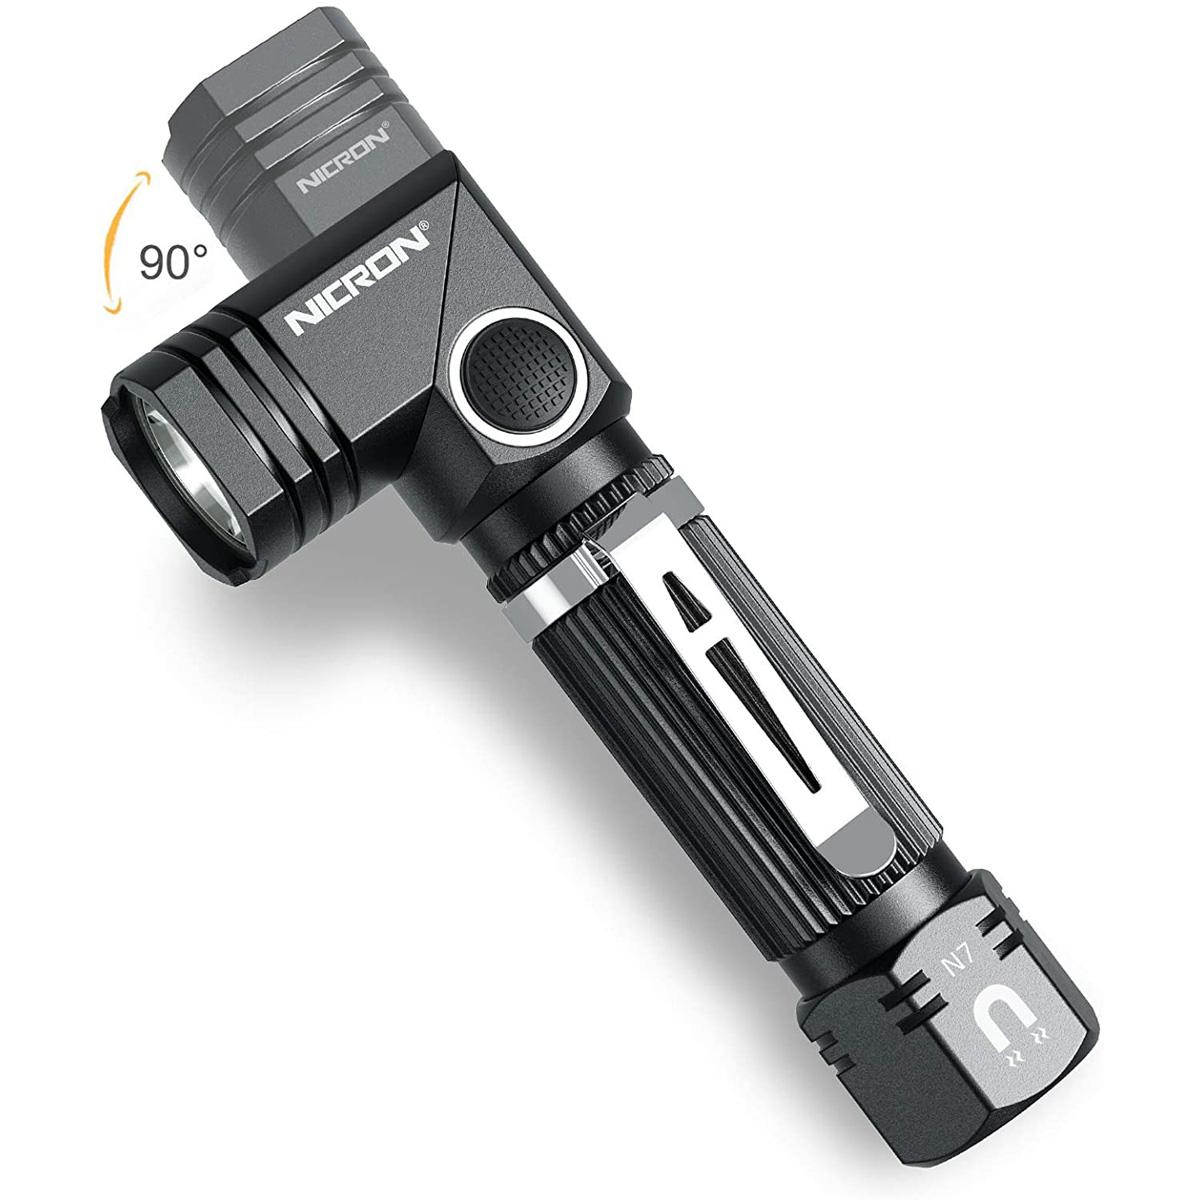 Nicron N7 600-Lumen IP65 Waterproof LED Tactical Flashlight for $9.99